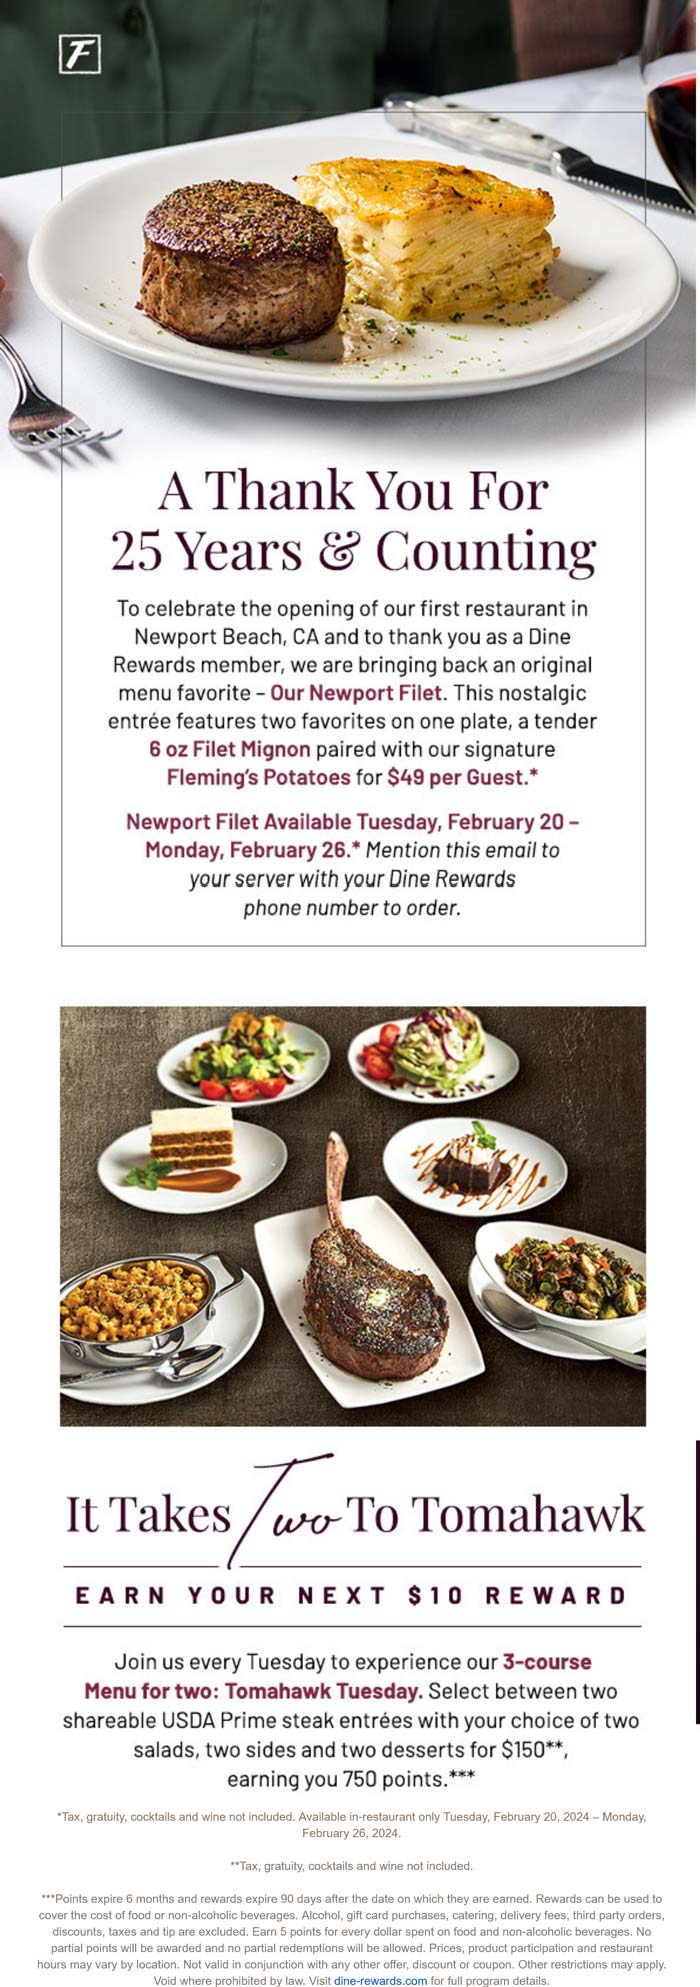 Flemings restaurants Coupon  Filet mignon + potatoes = $49 at Flemings steakhouse #flemings 